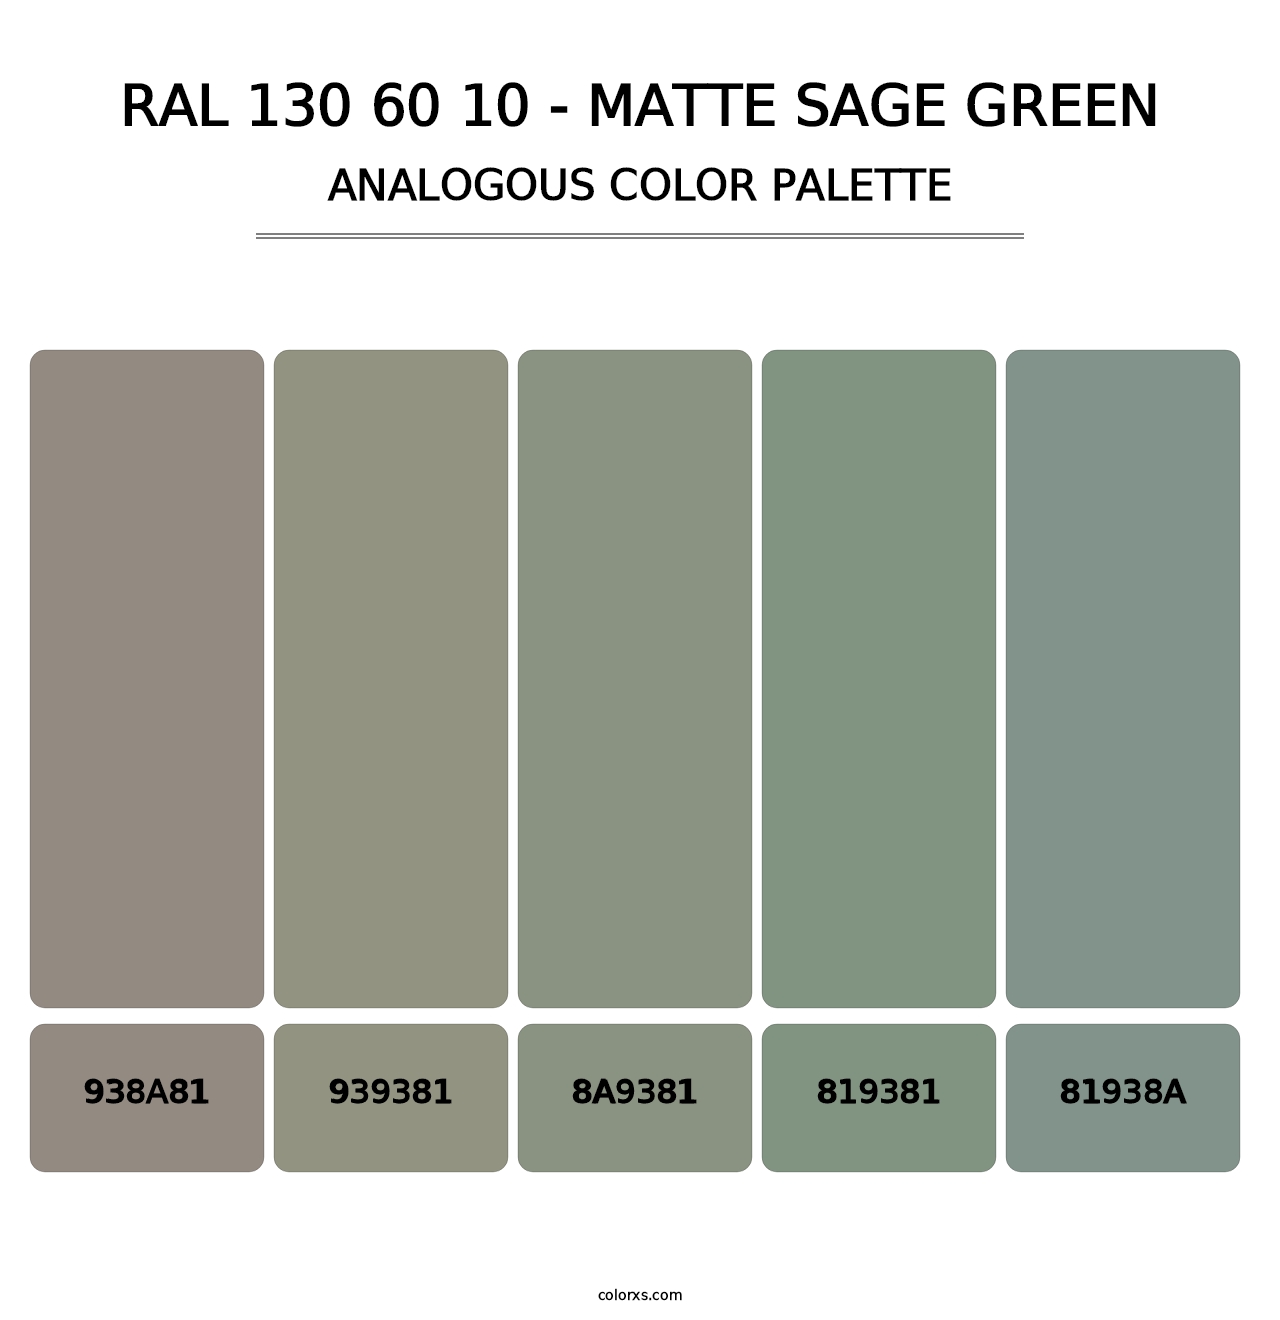 RAL 130 60 10 - Matte Sage Green - Analogous Color Palette